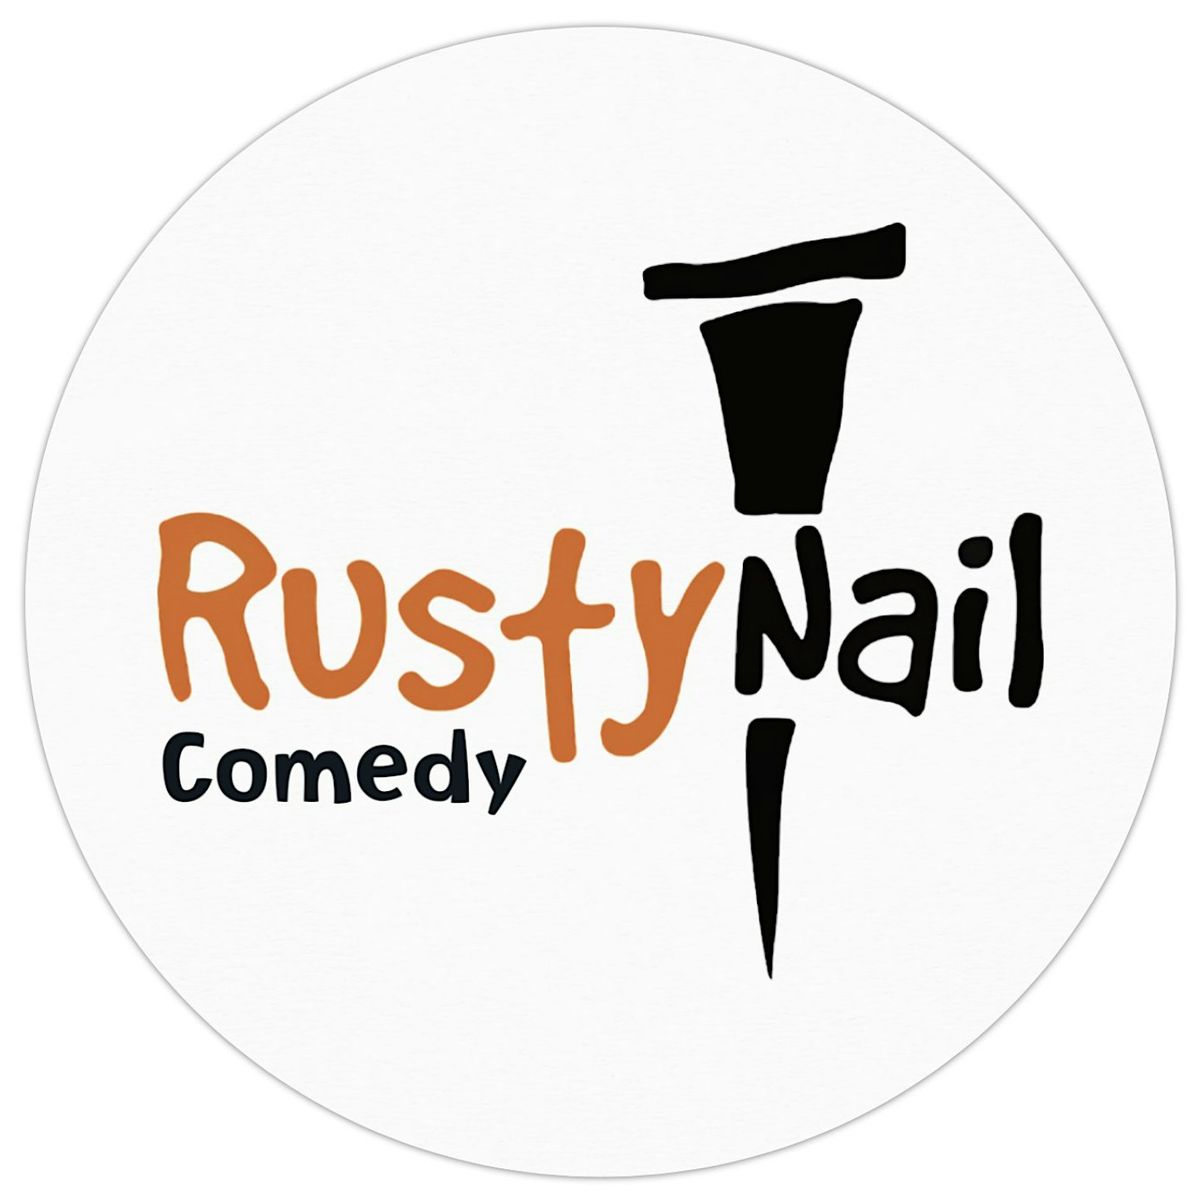 Rusty Nail Comedy Friday night Headliner John Mostyn